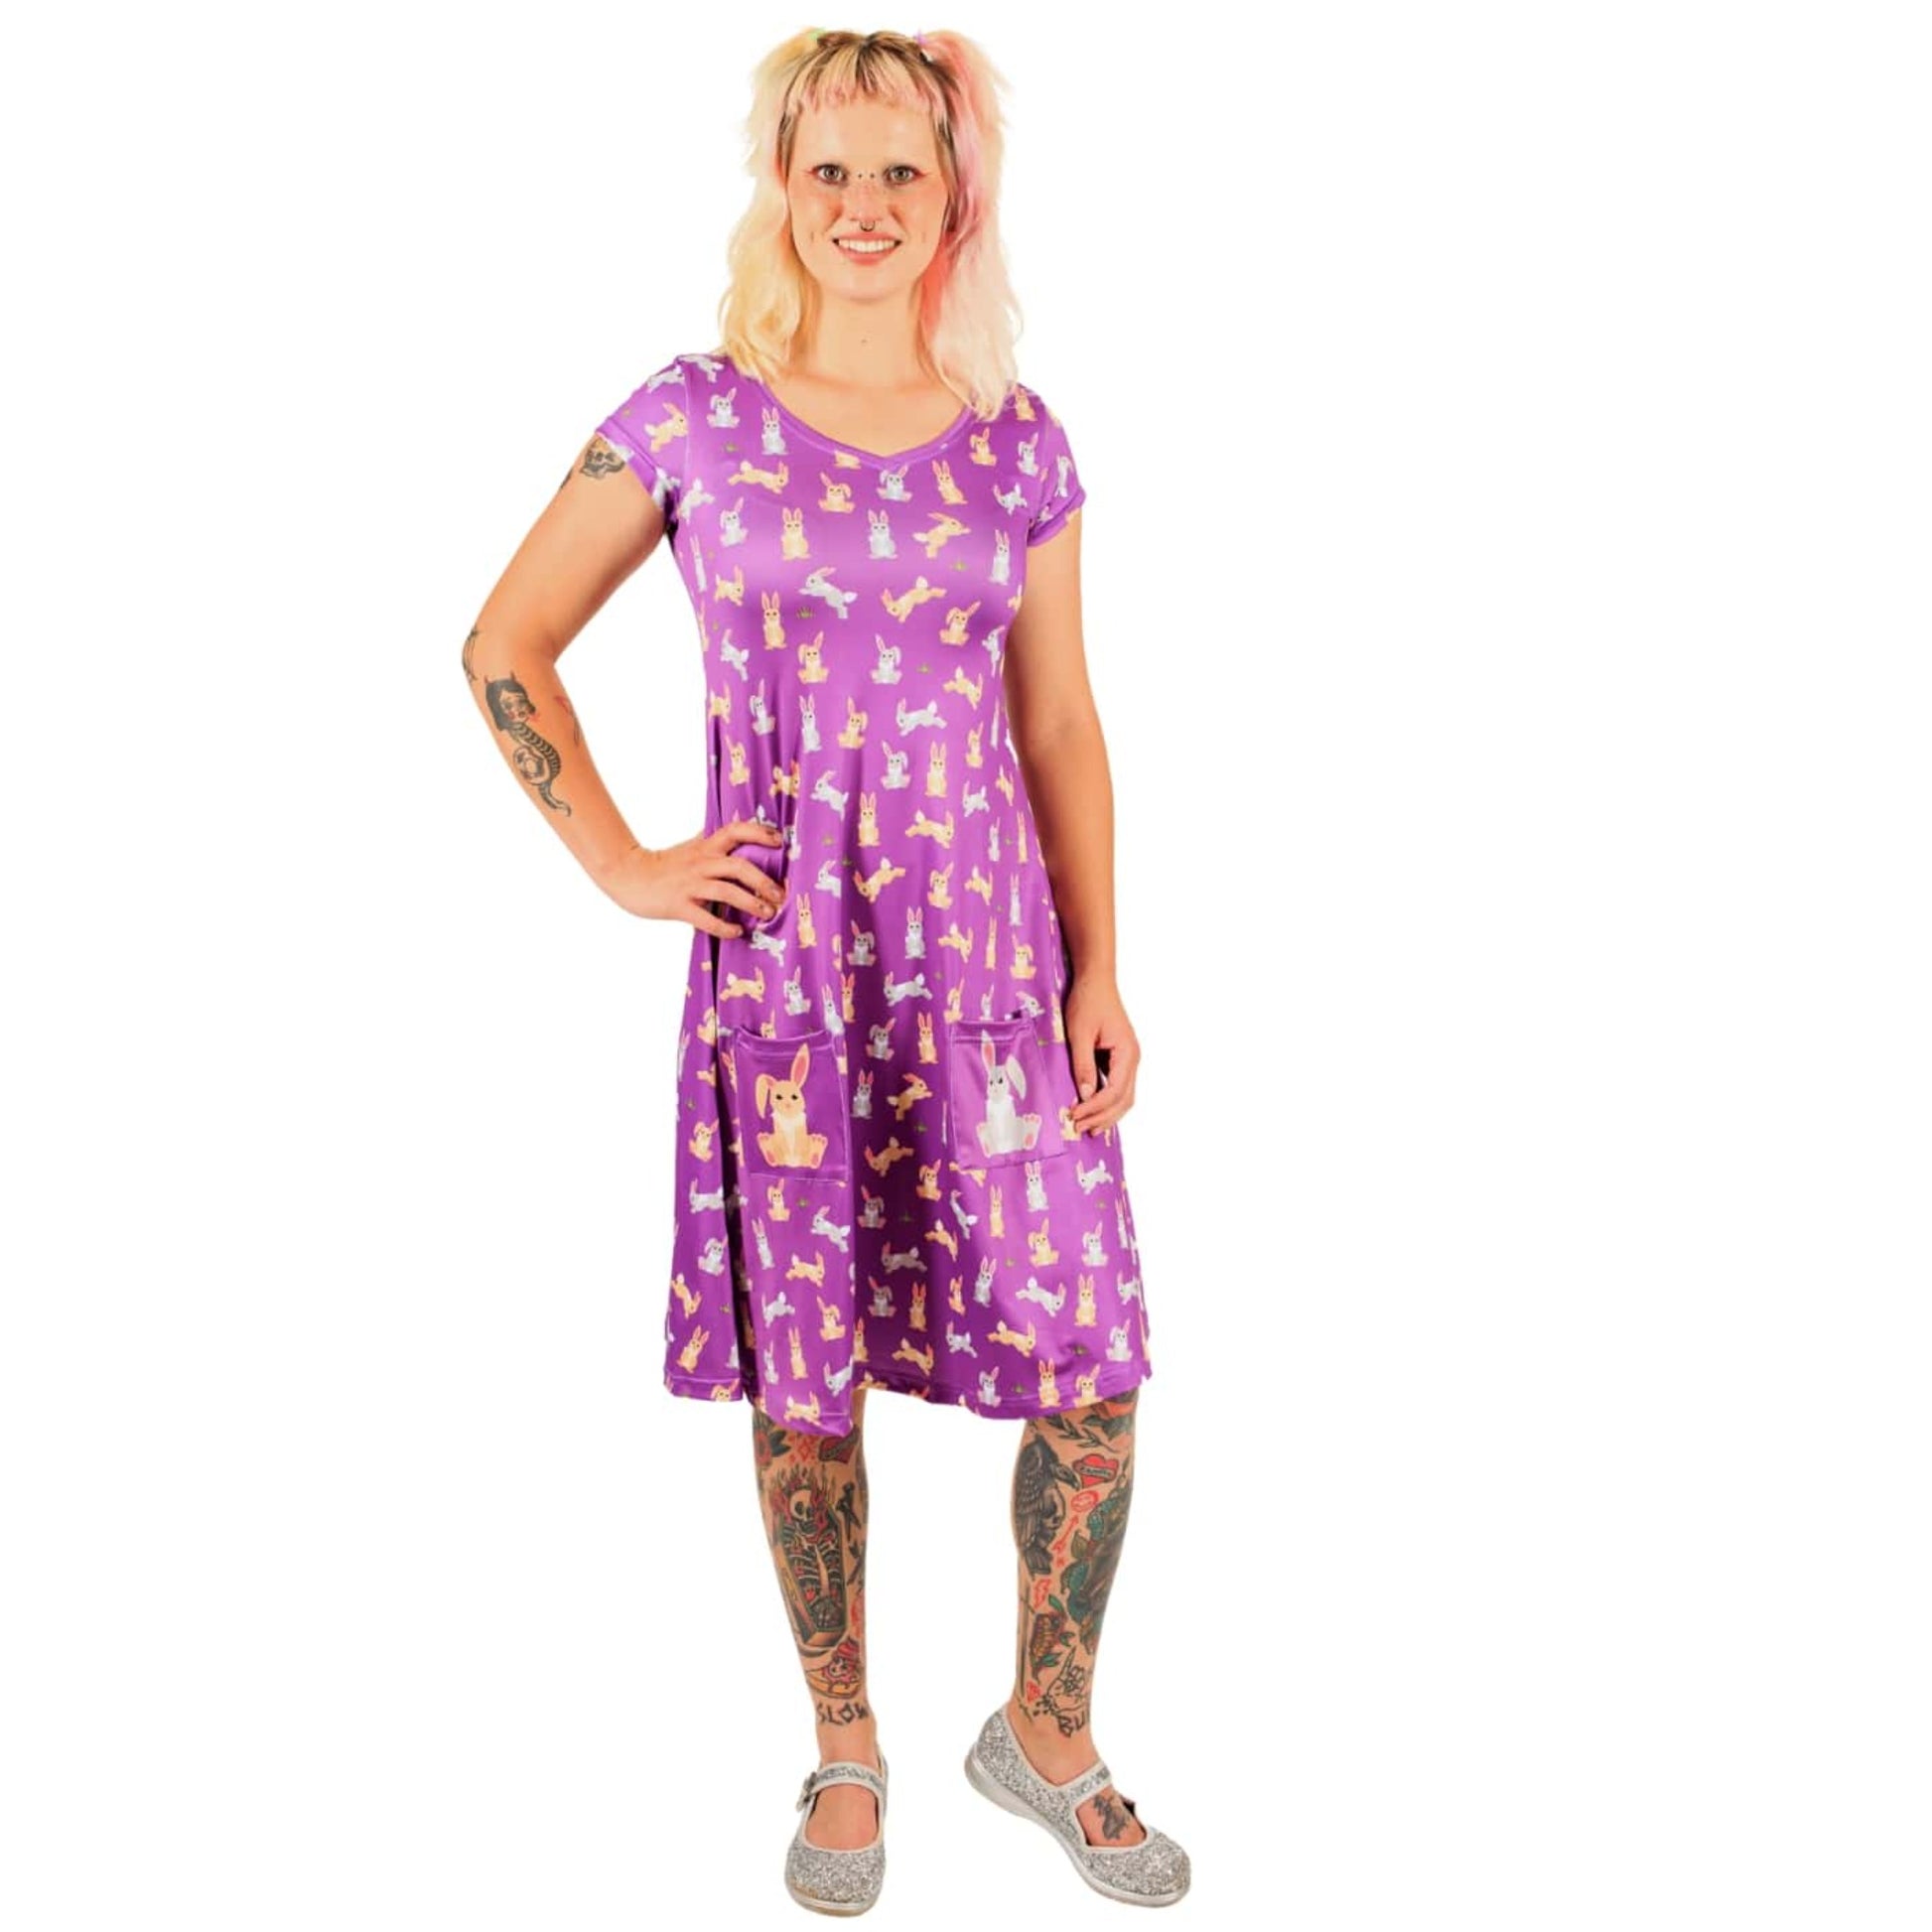 Fluffle Tunic Dress by RainbowsAndFairies.com.au (Rabbit - Bunny - Purple - Vintage Inspired - Kitsch - Dress With Pockets - Mod) - SKU: CL_TUNDR_FLUFF_ORG - Pic-03